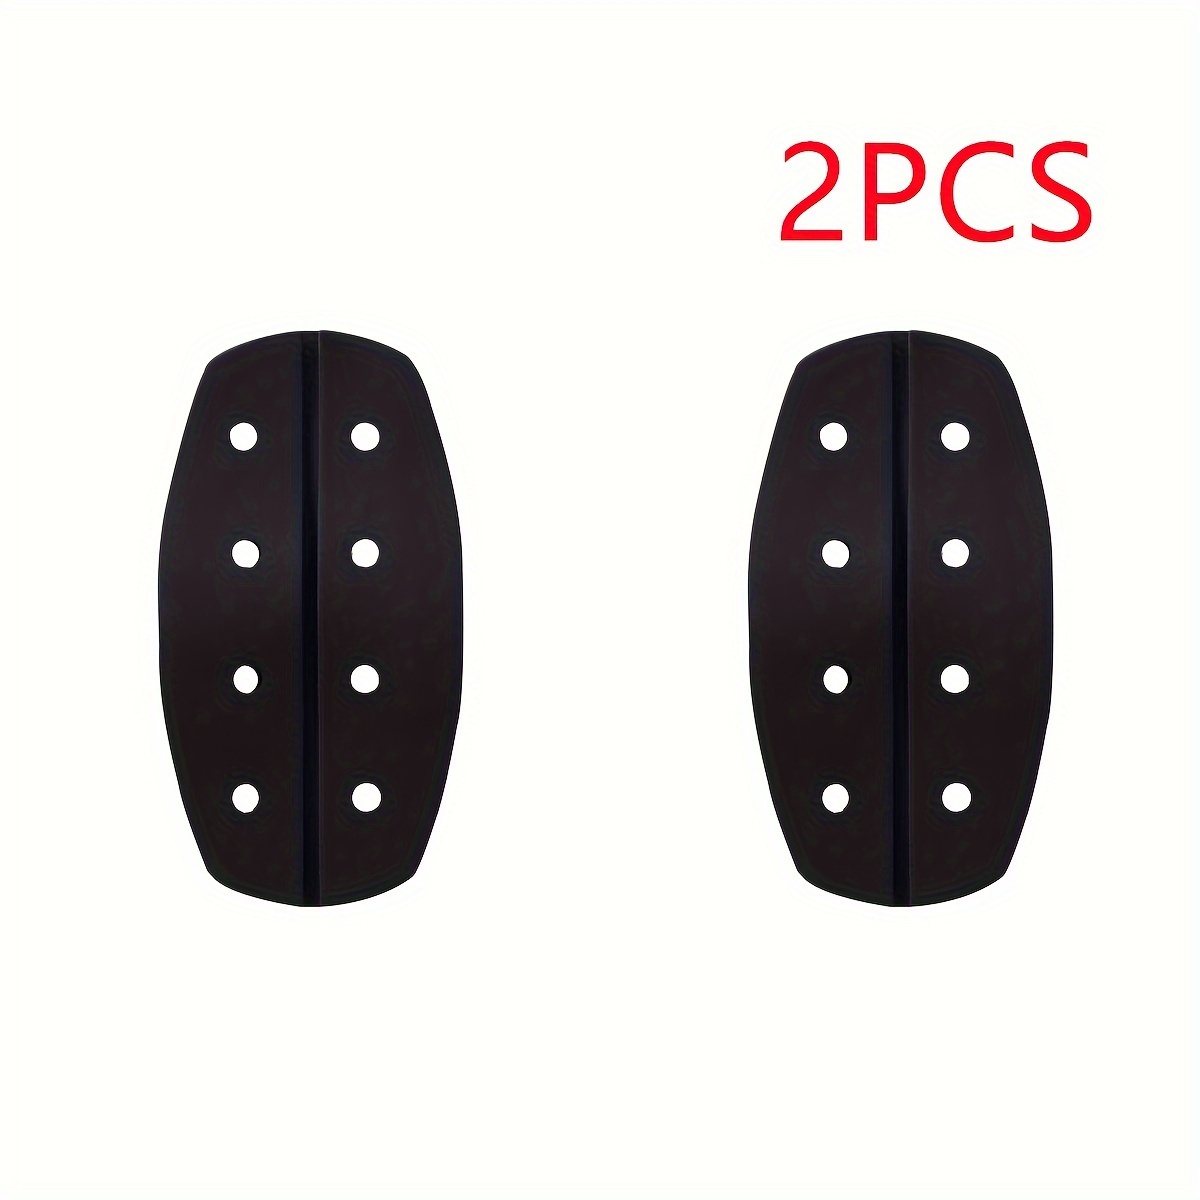 2pcs Women's Silicone Bra Strap Cushion Anti-Slip Shoulder Pads